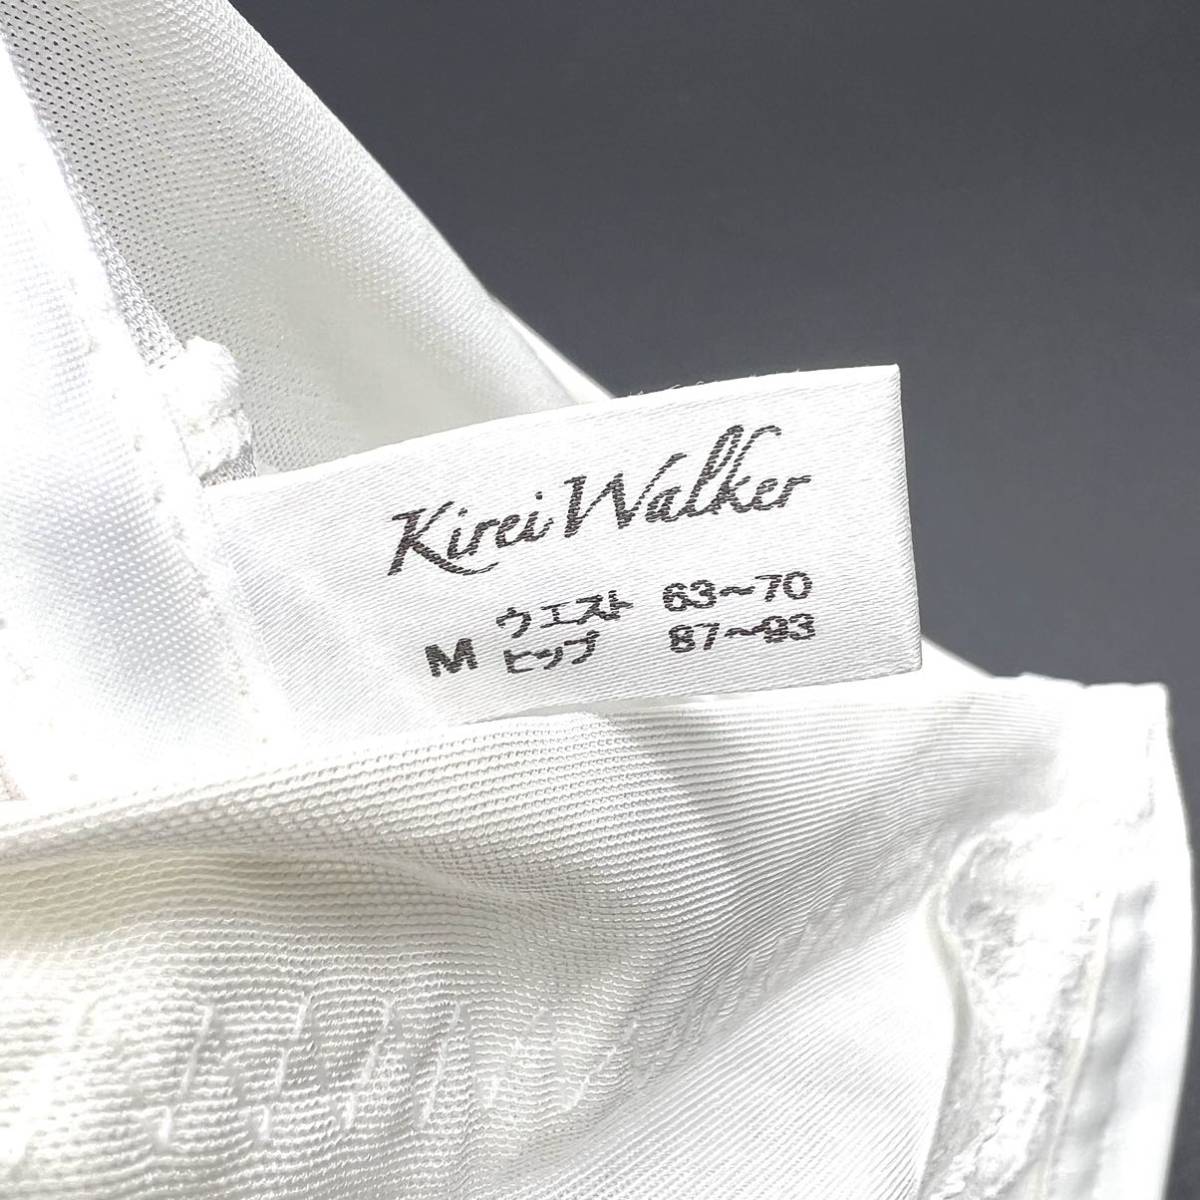 THE D The ti clean War car pants M white wedding lingerie wedding underwear inner kla ude .a wedding dress type correction 